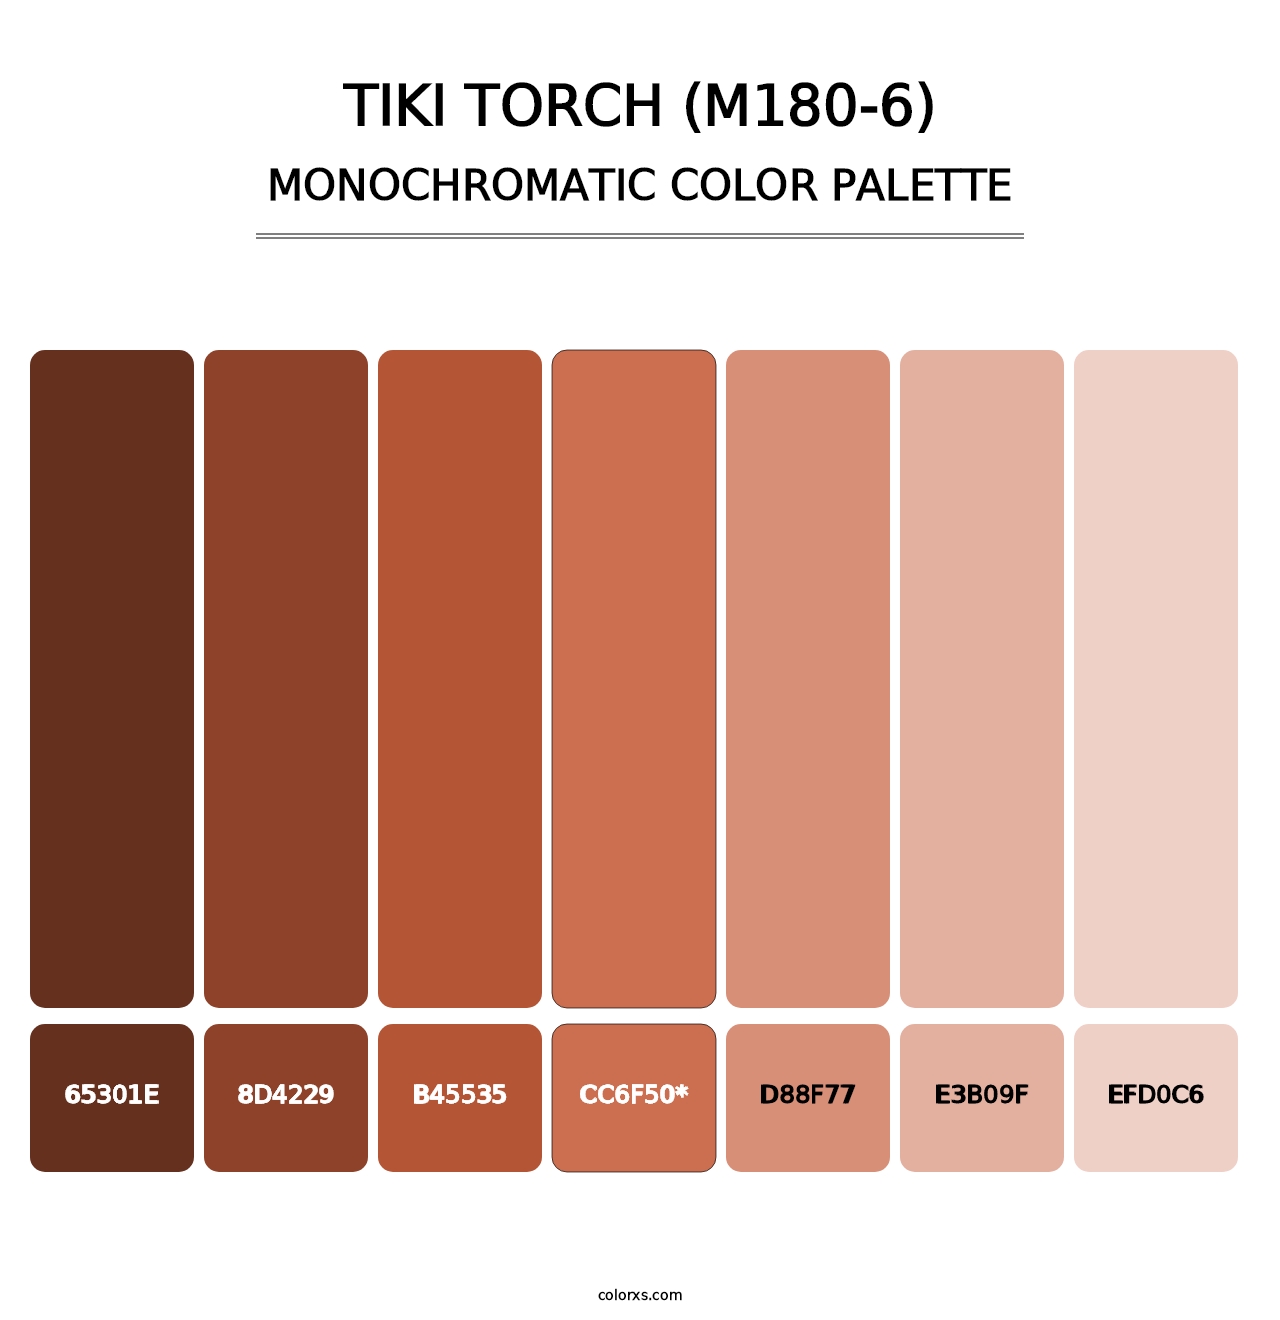 Tiki Torch (M180-6) - Monochromatic Color Palette